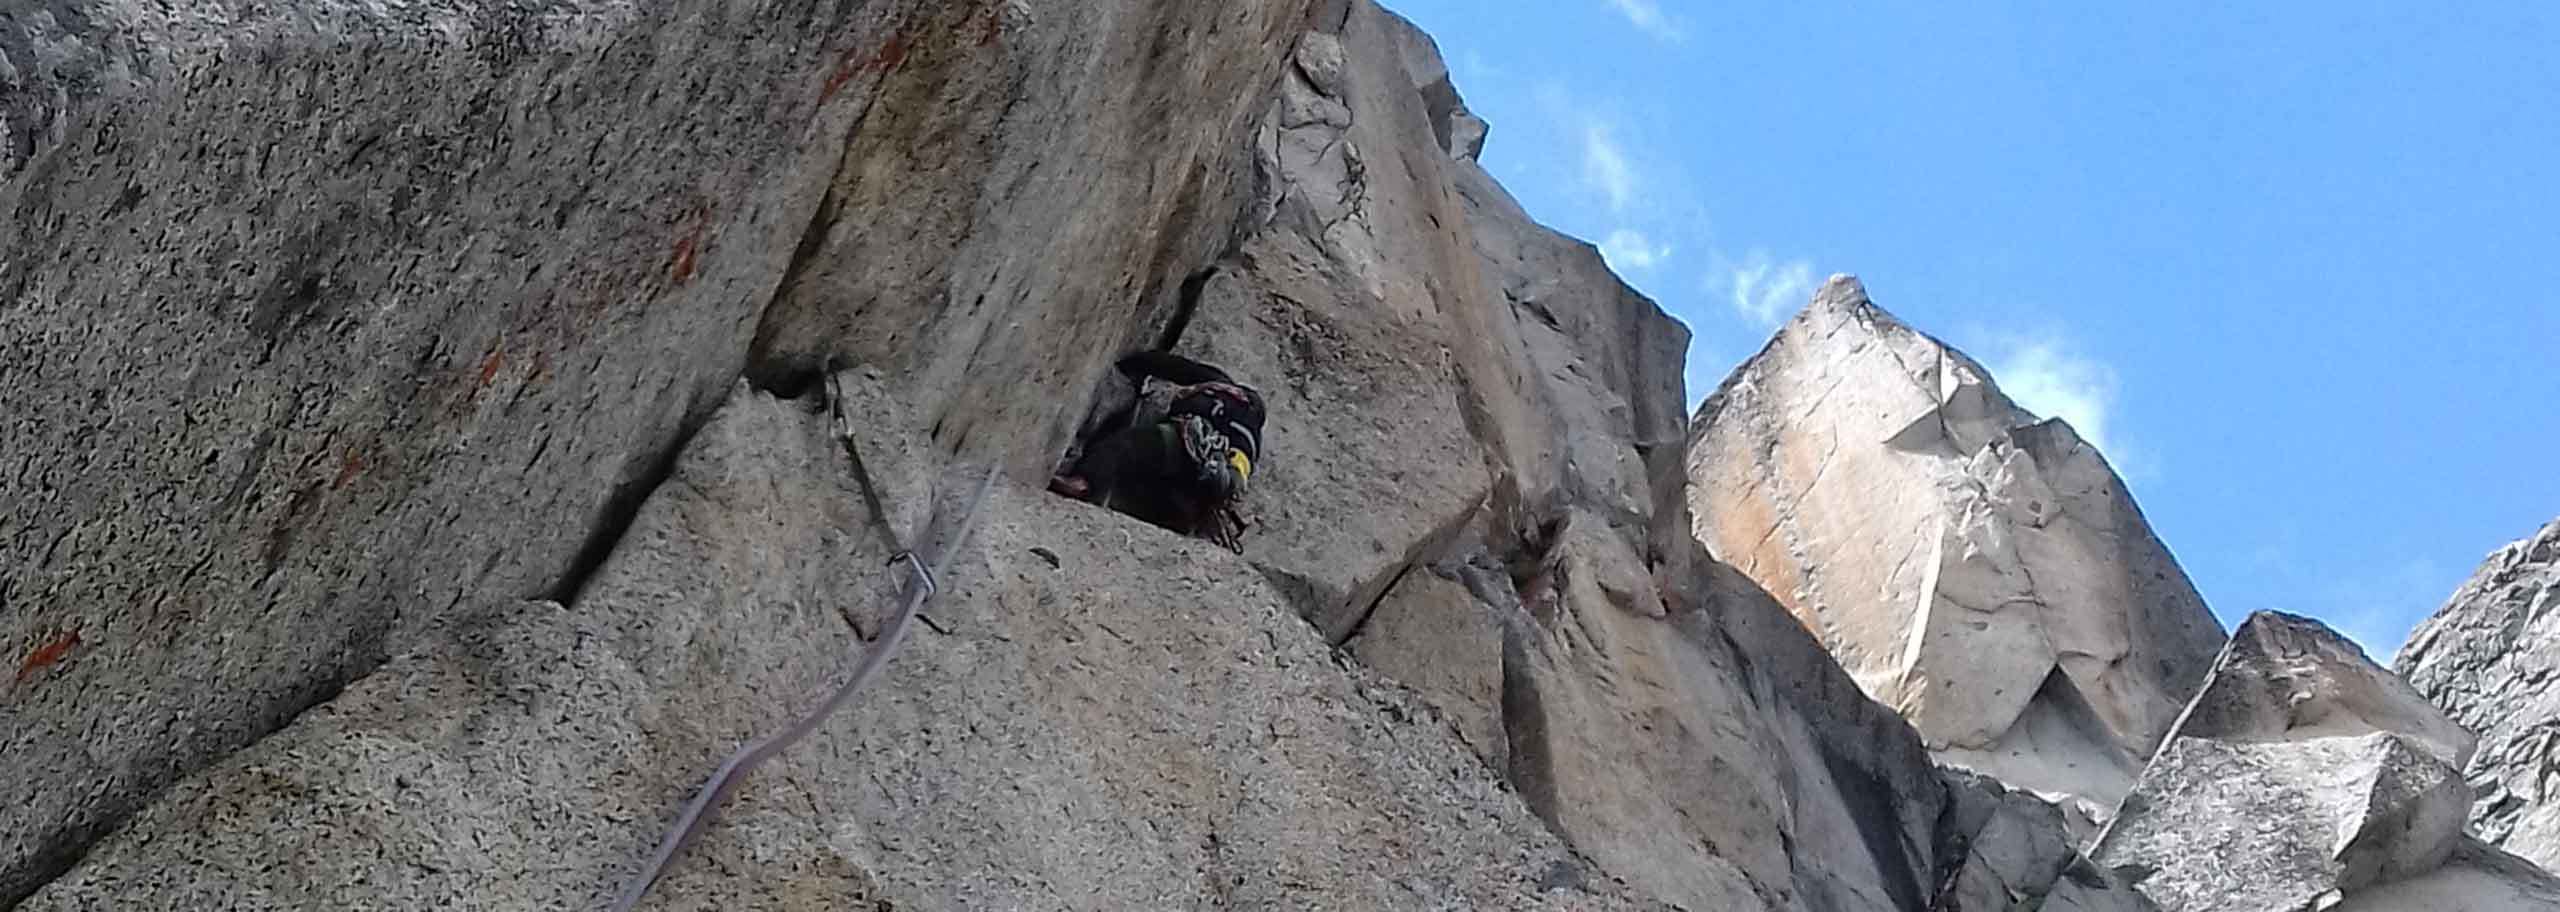 Rock Climbing in Madesimo with a Mountain Guide